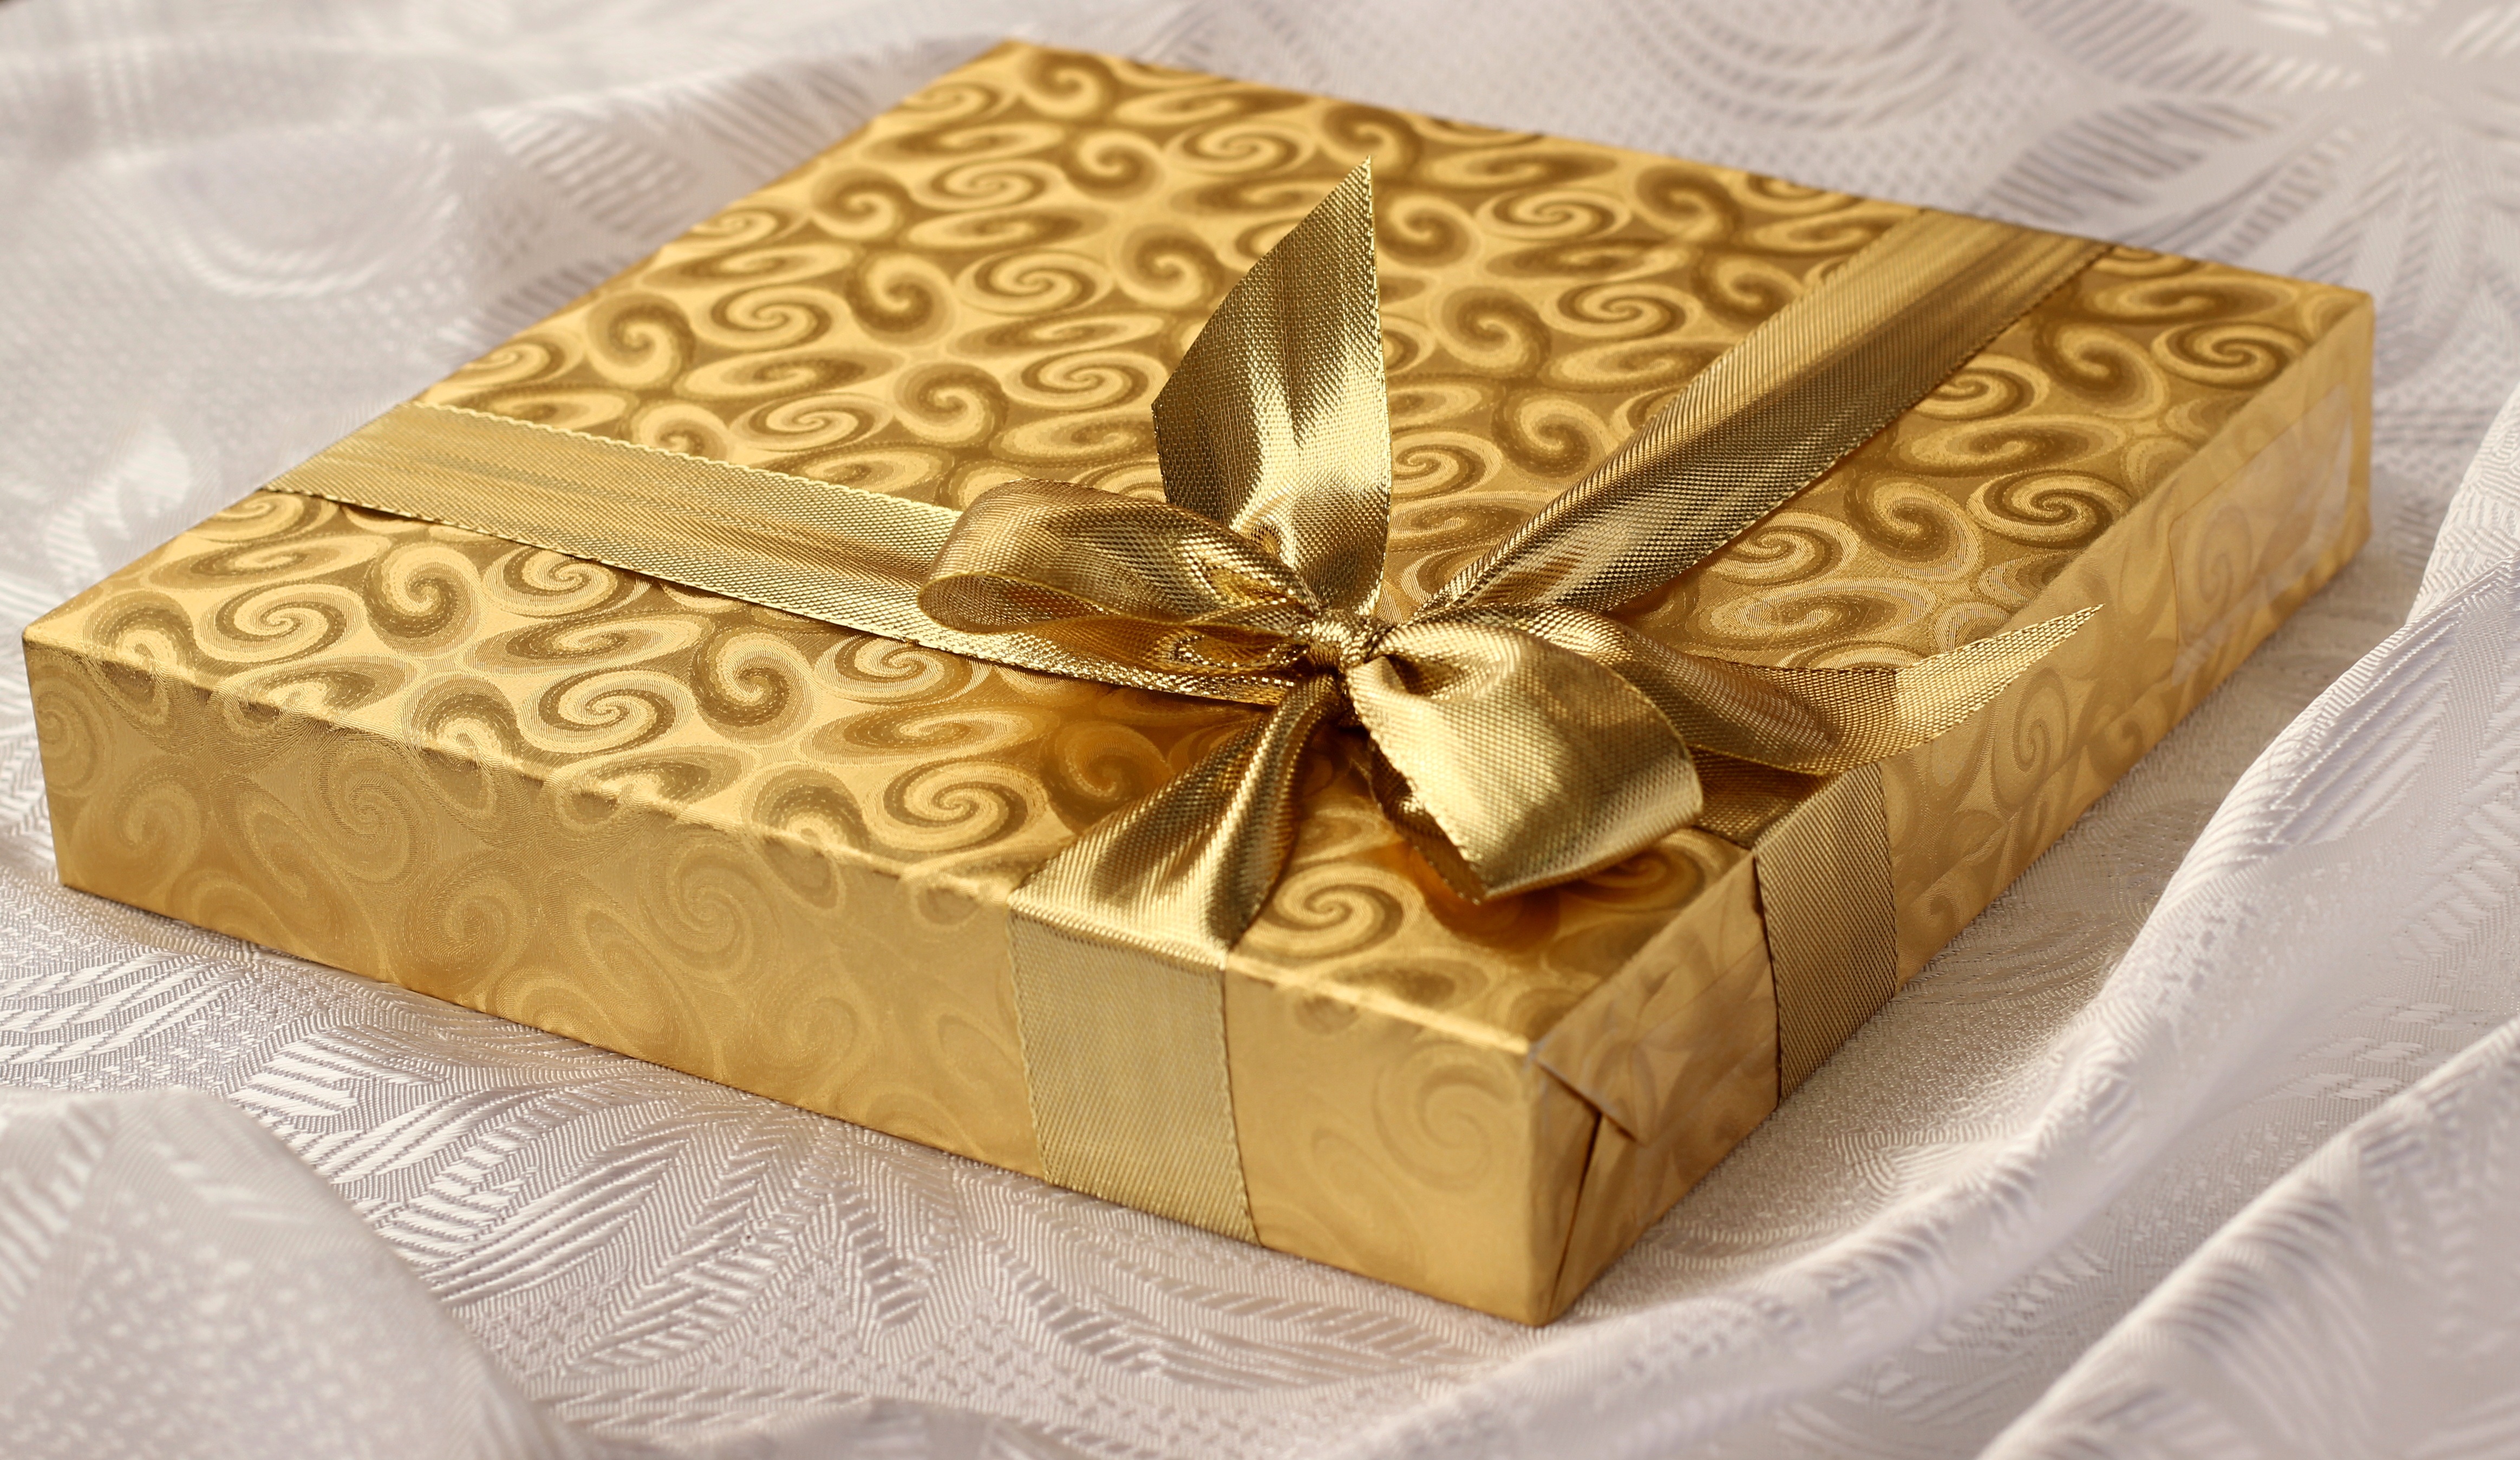 Zastaki.com - Красивая золотистая коробка с подарком на кровати 